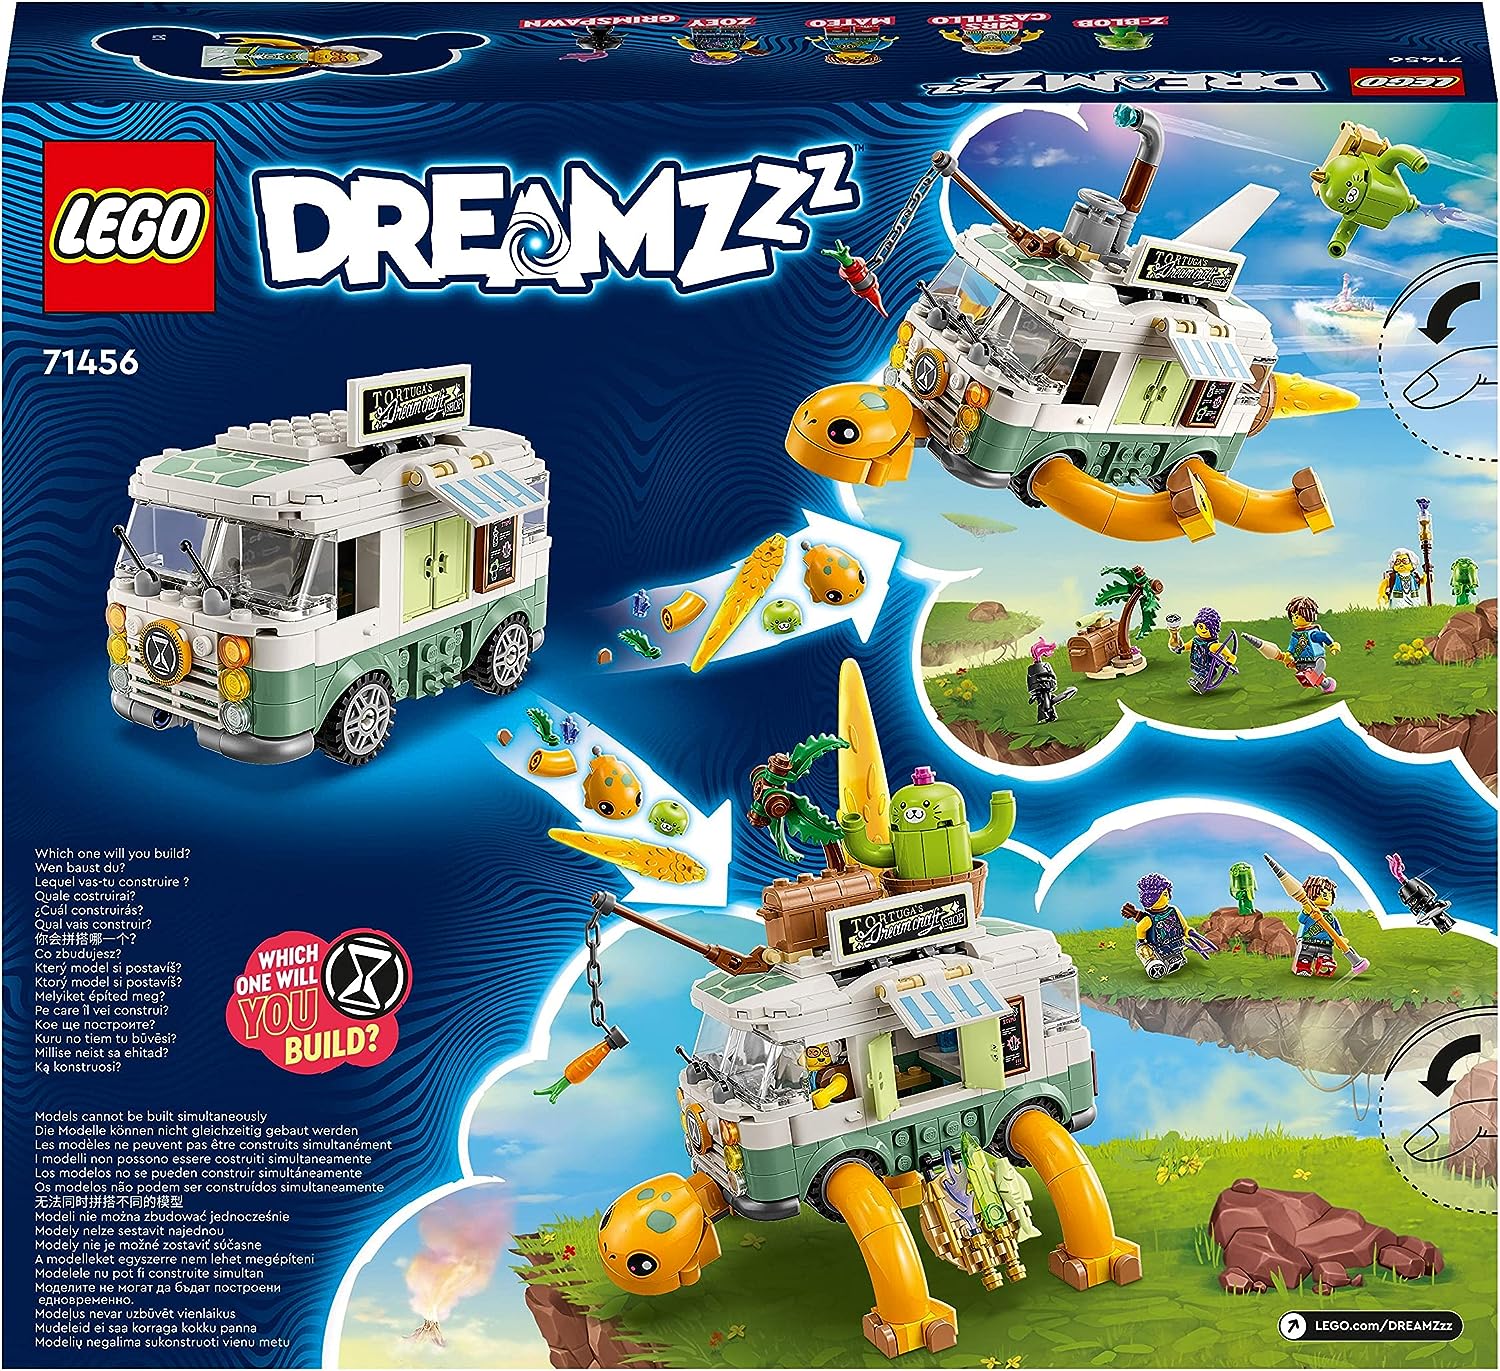 LEGO DREAMZzz Mrs. Castillo's Turtle Van Set